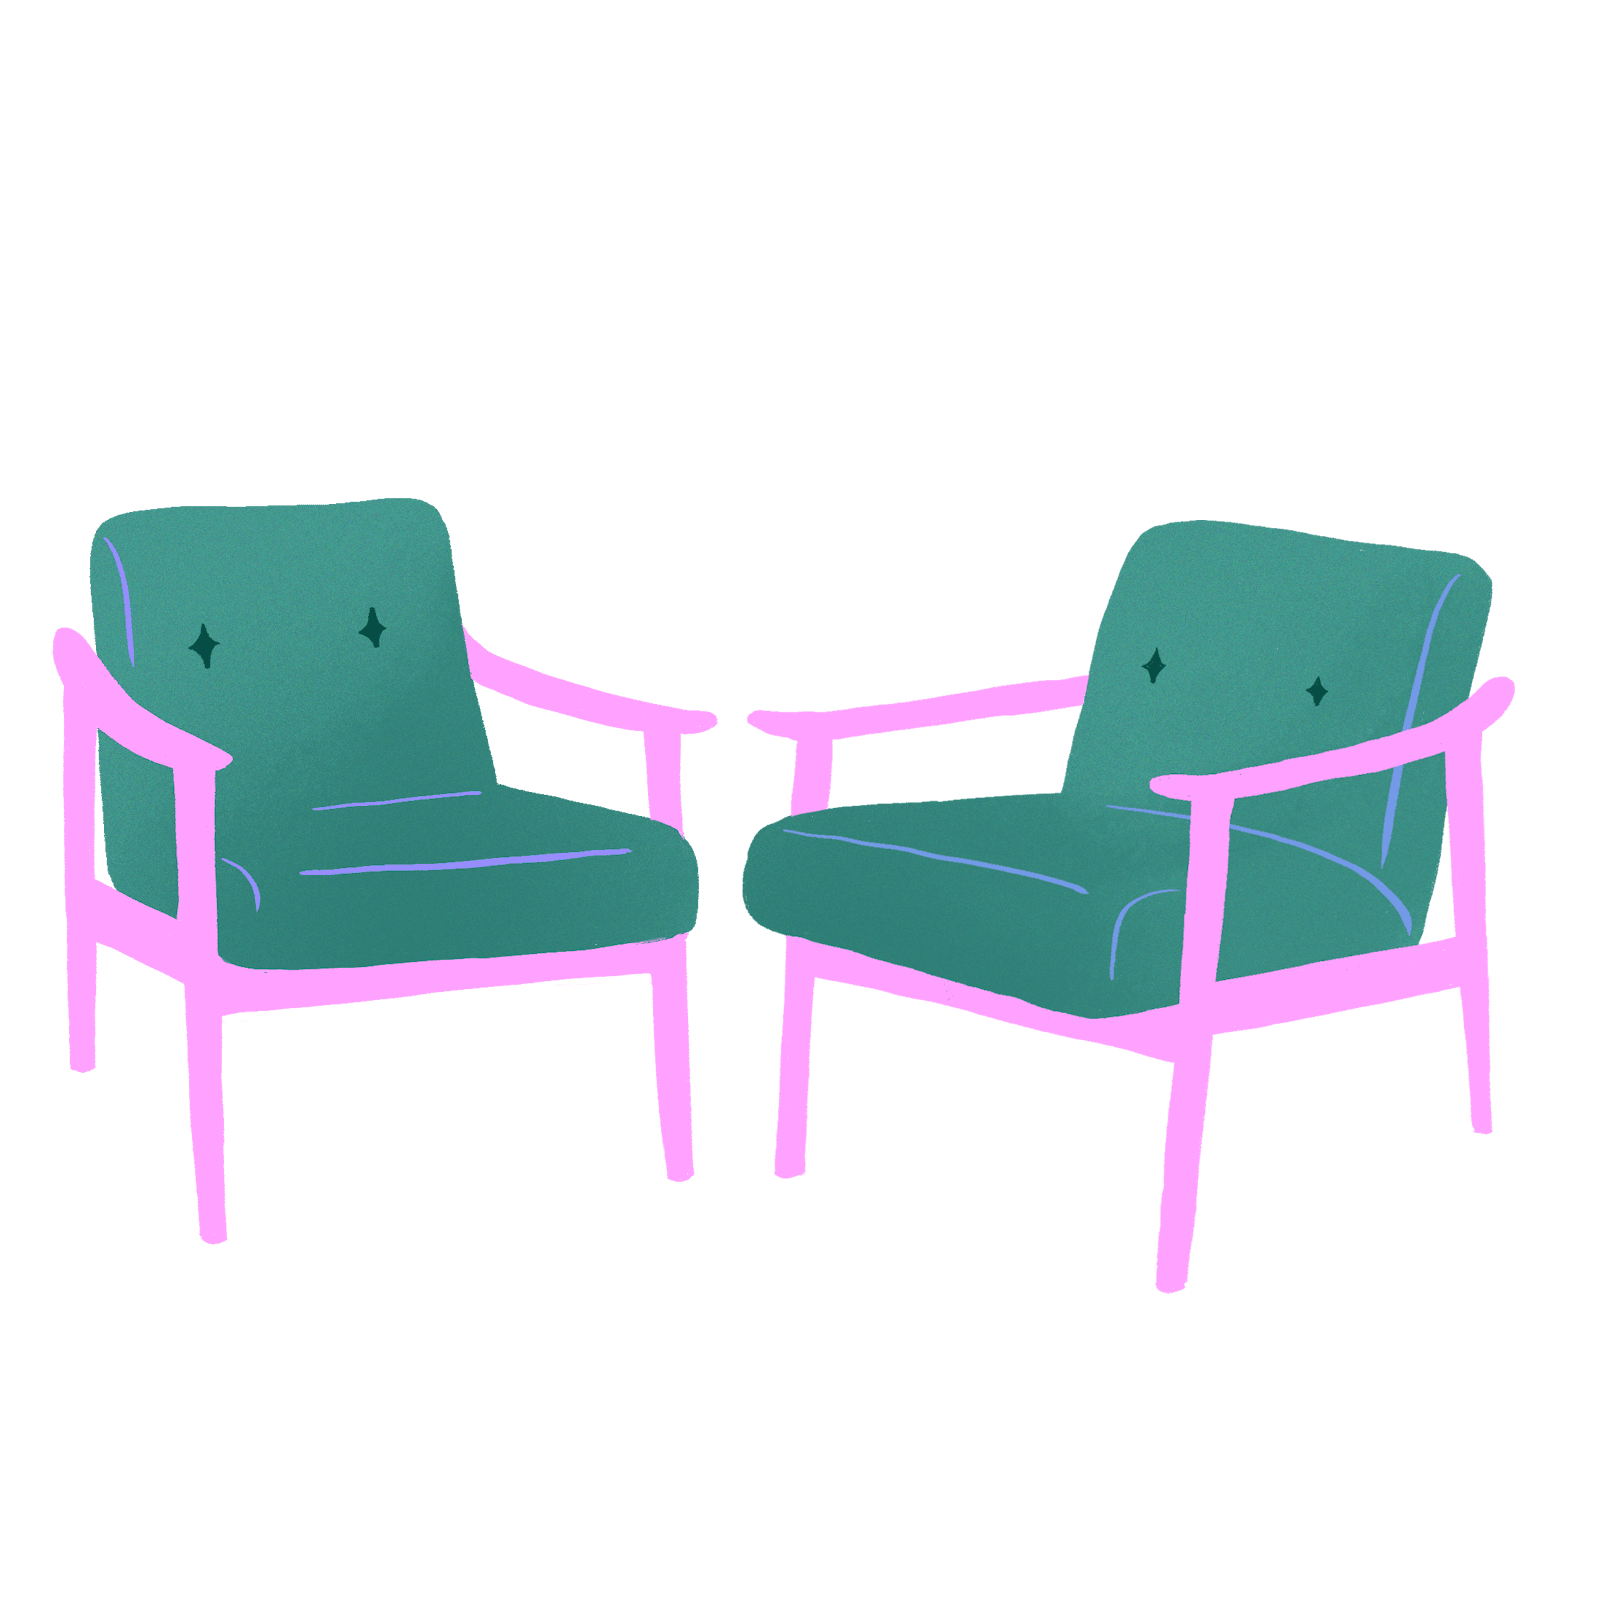 Zwei leere Stühle